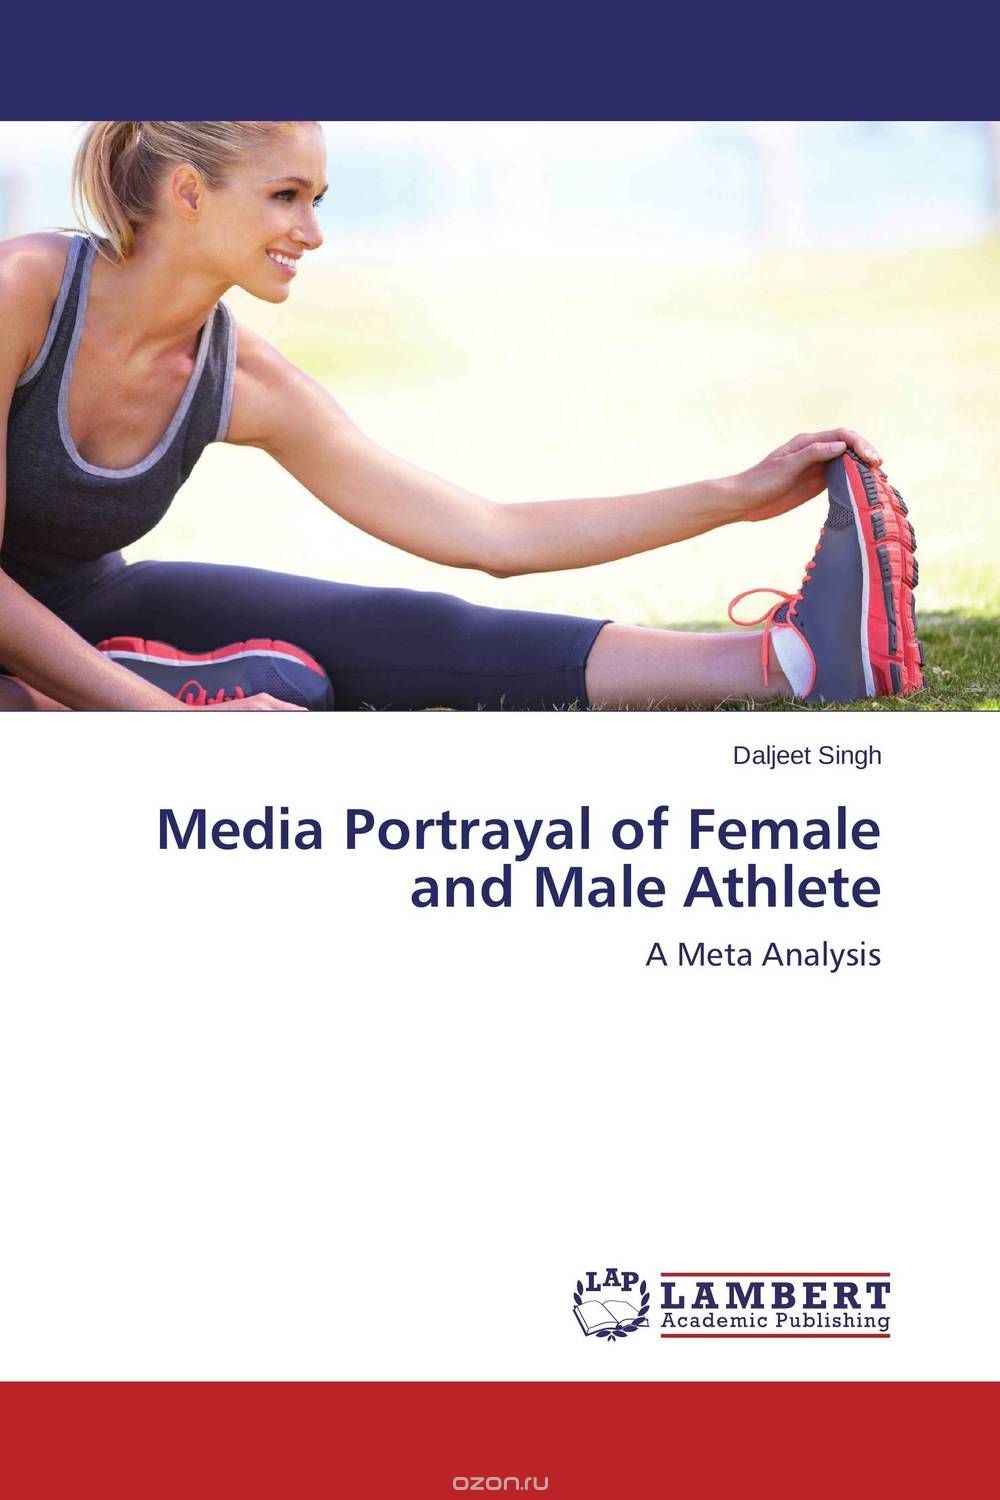 Скачать книгу "Media Portrayal of Female and Male Athlete"